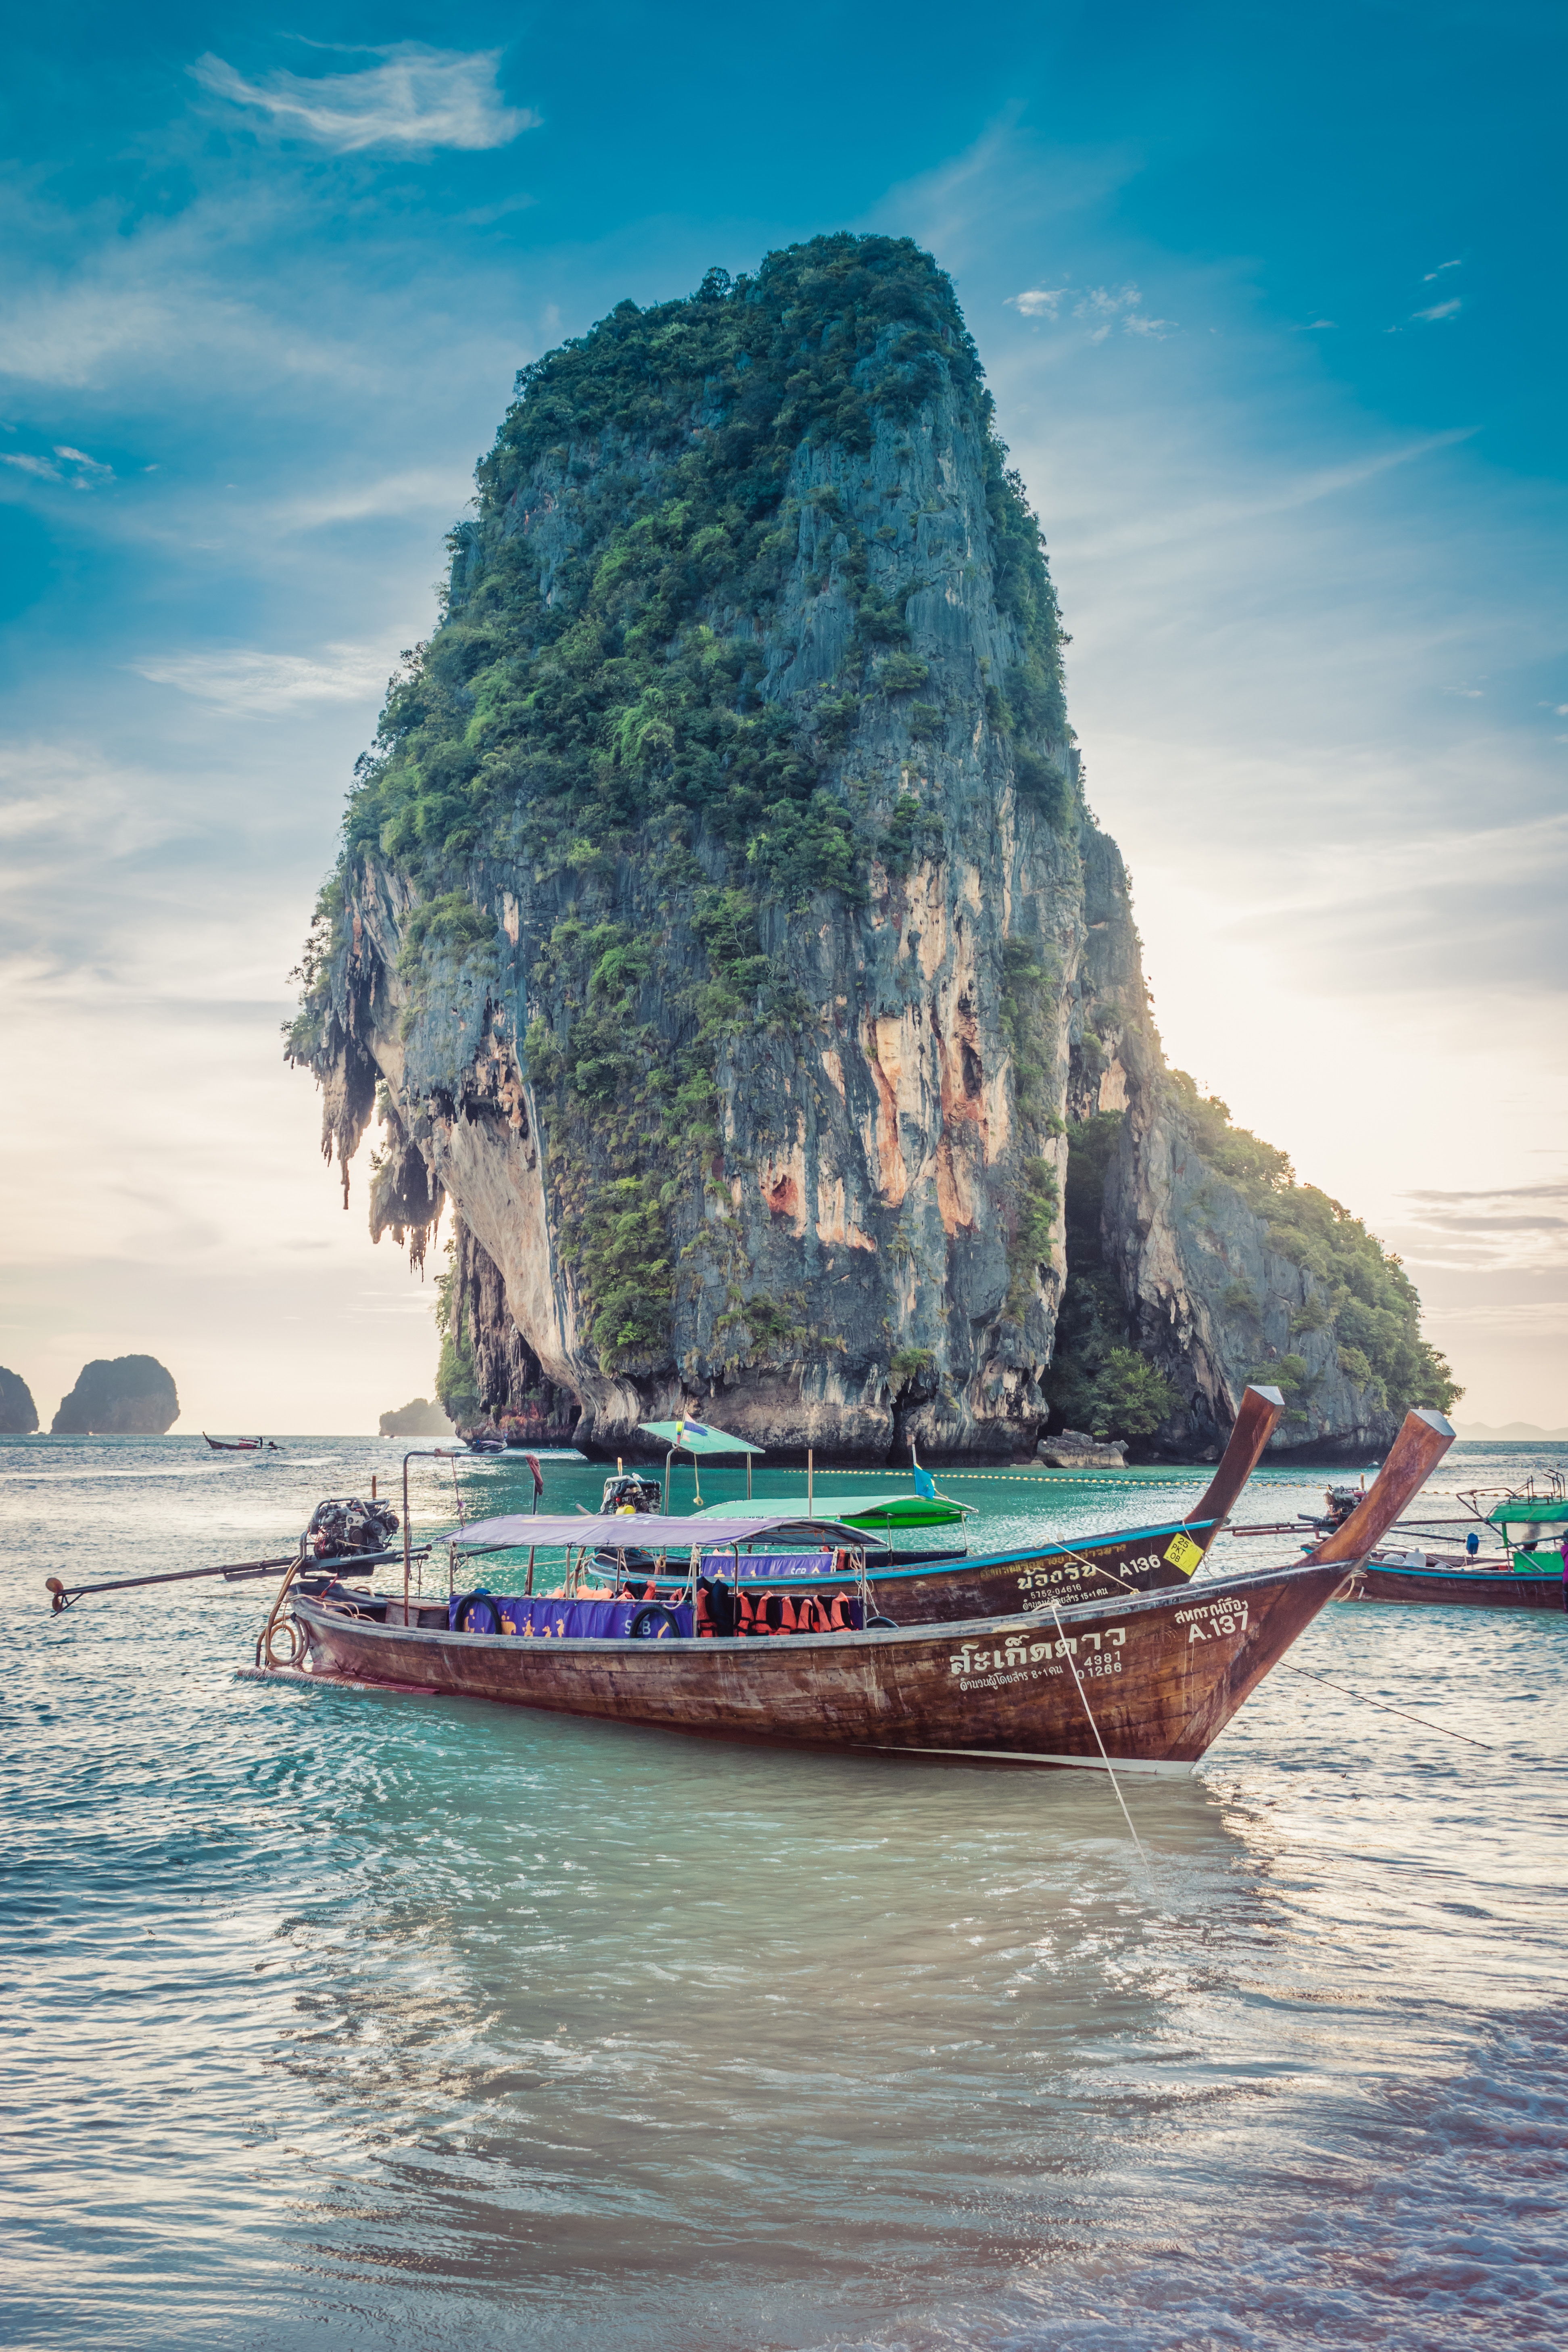 Thai fishing boat near large rock formation